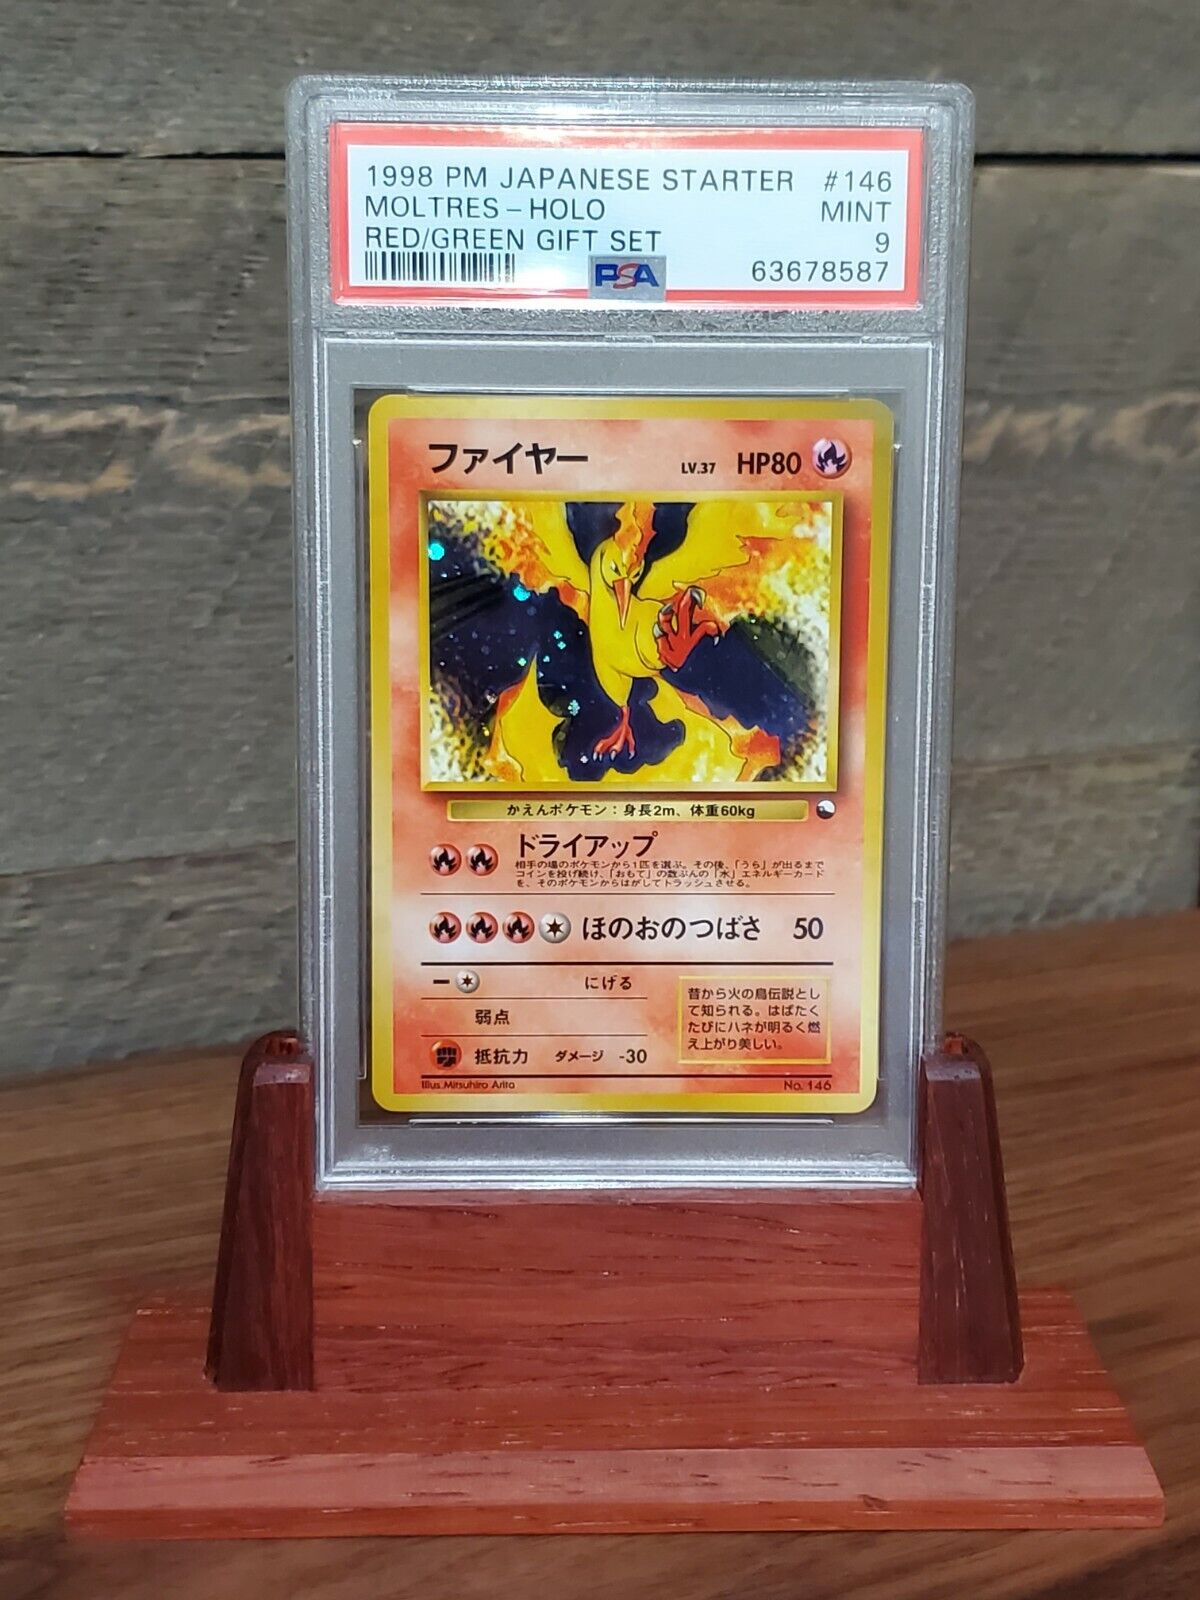 PSA 9 Pokemon Moltres Holo 1998 Japanese Quick Starter Red/Green Gift Set - MINT